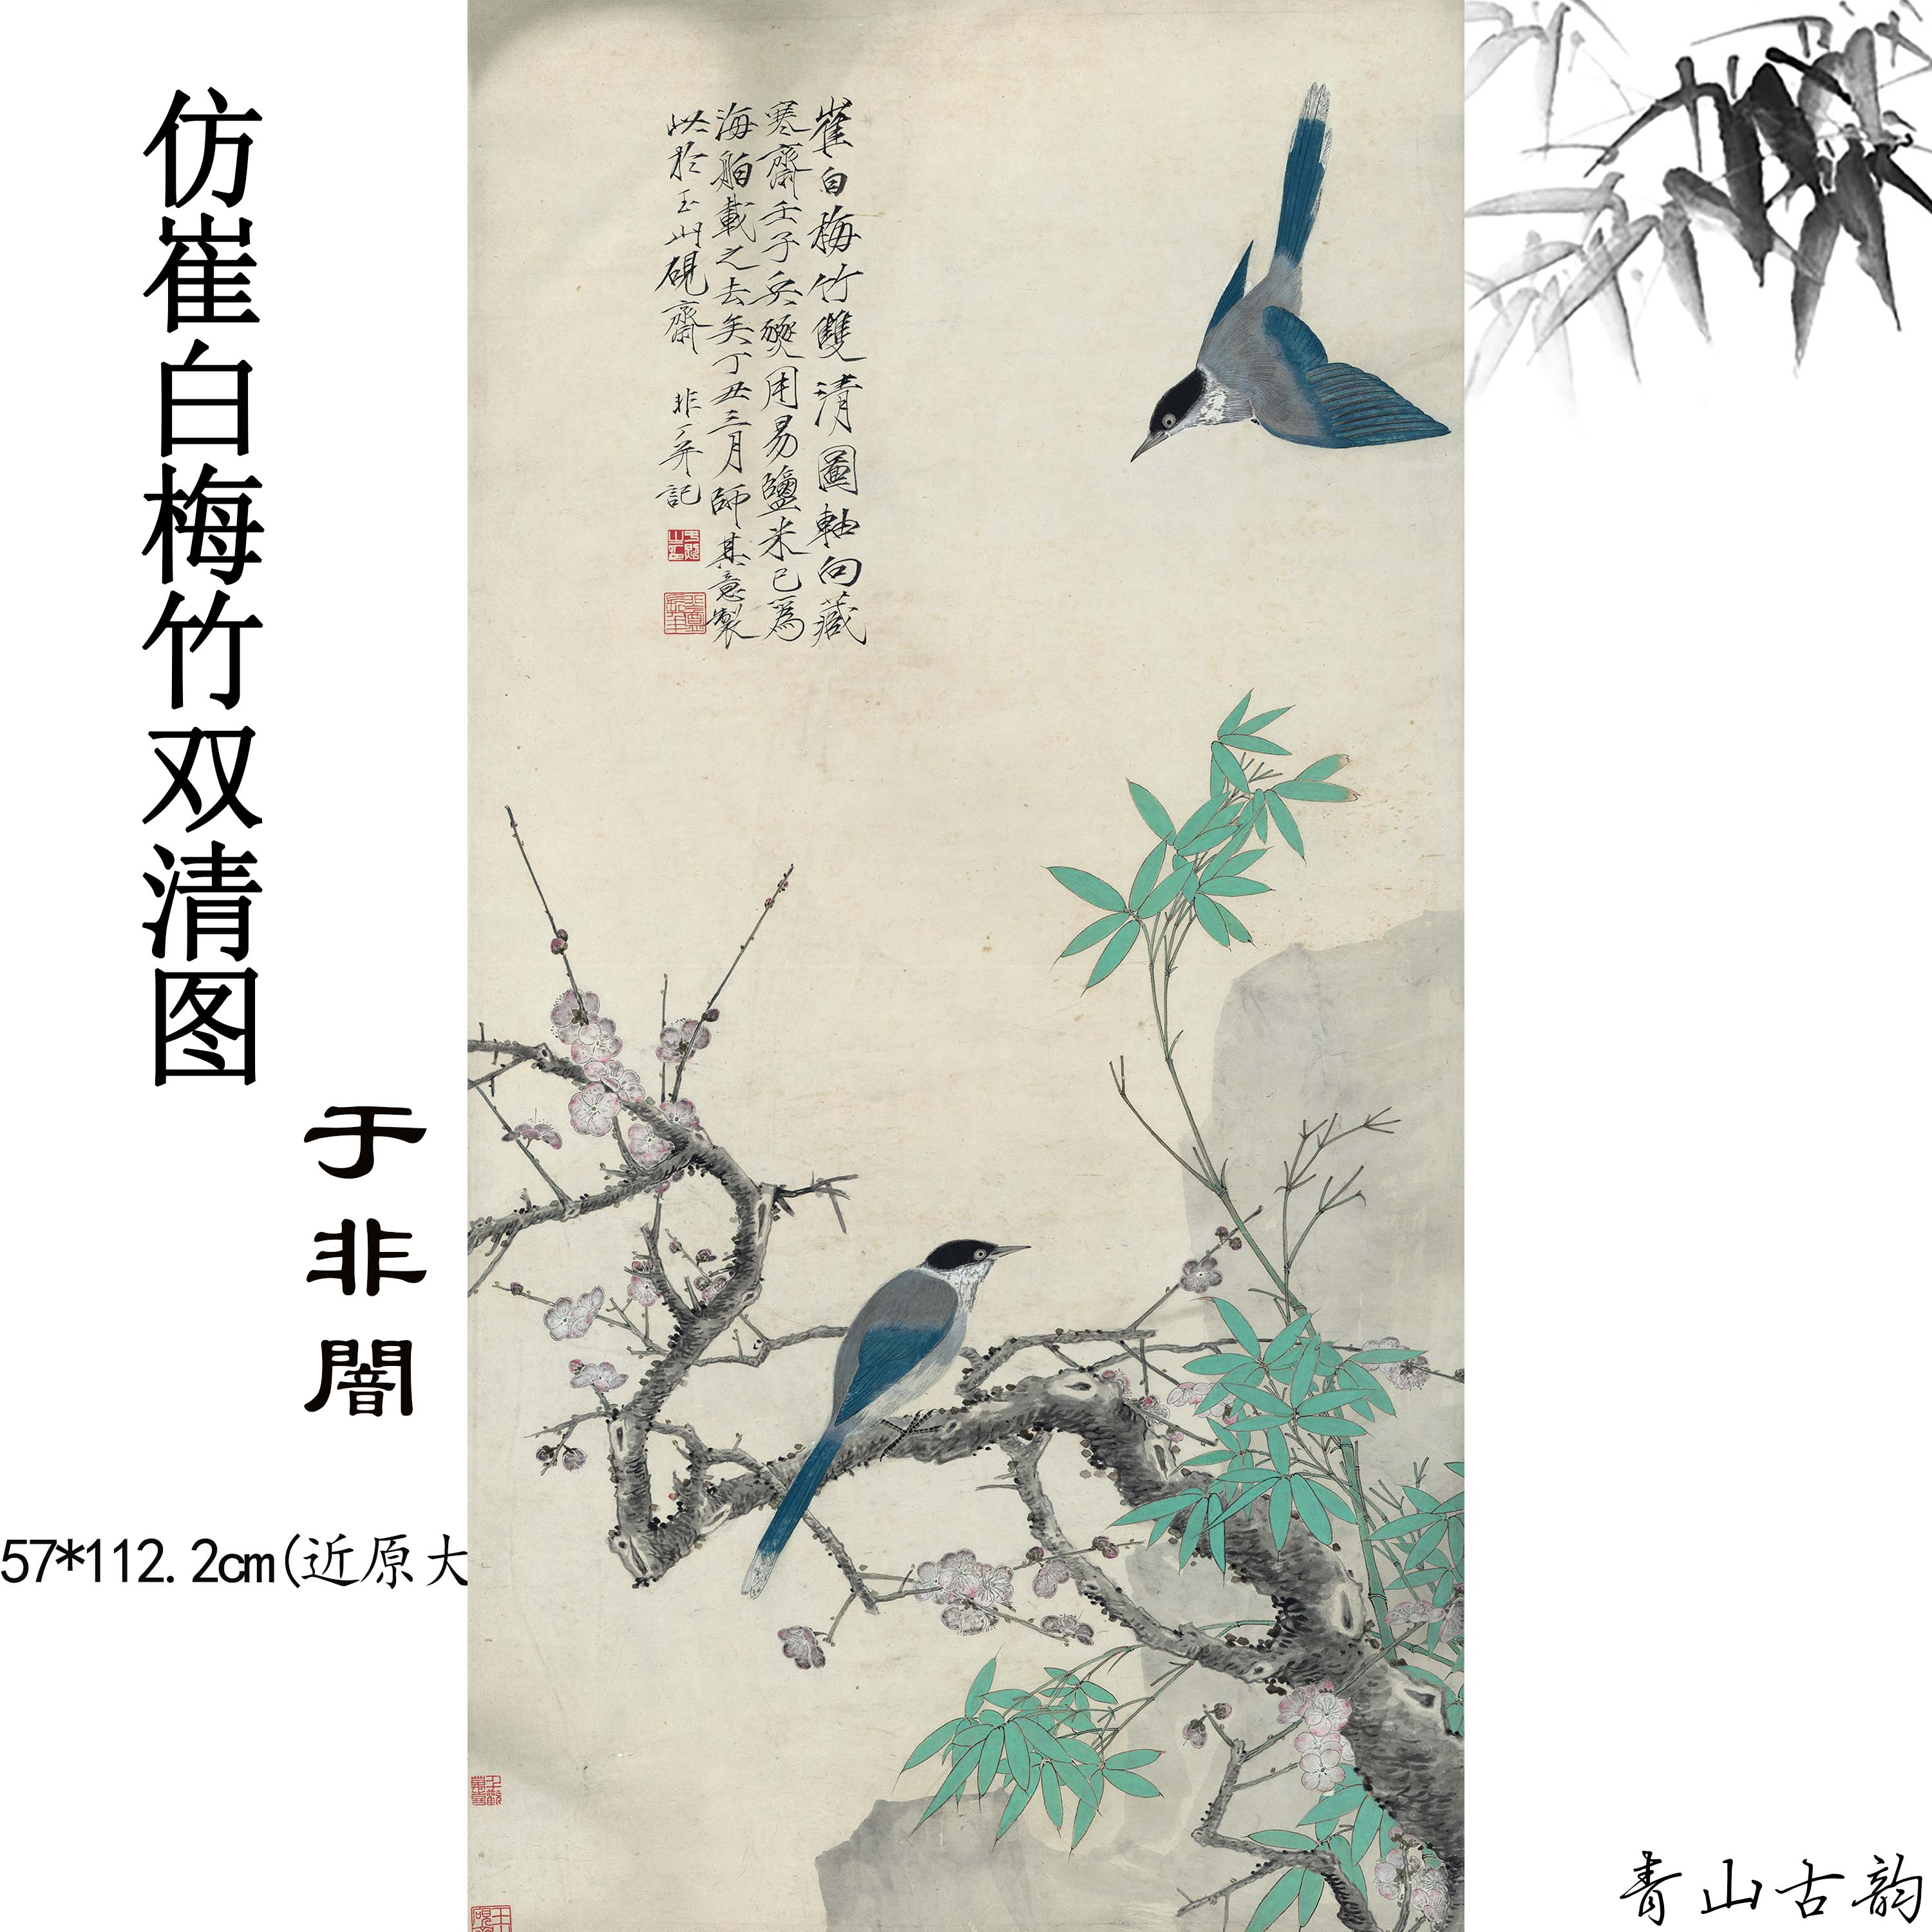 Chinese Antique Art Painting 于非闇 仿崔白梅竹双清图 Yu Feian Cui Bai plum and bamboo